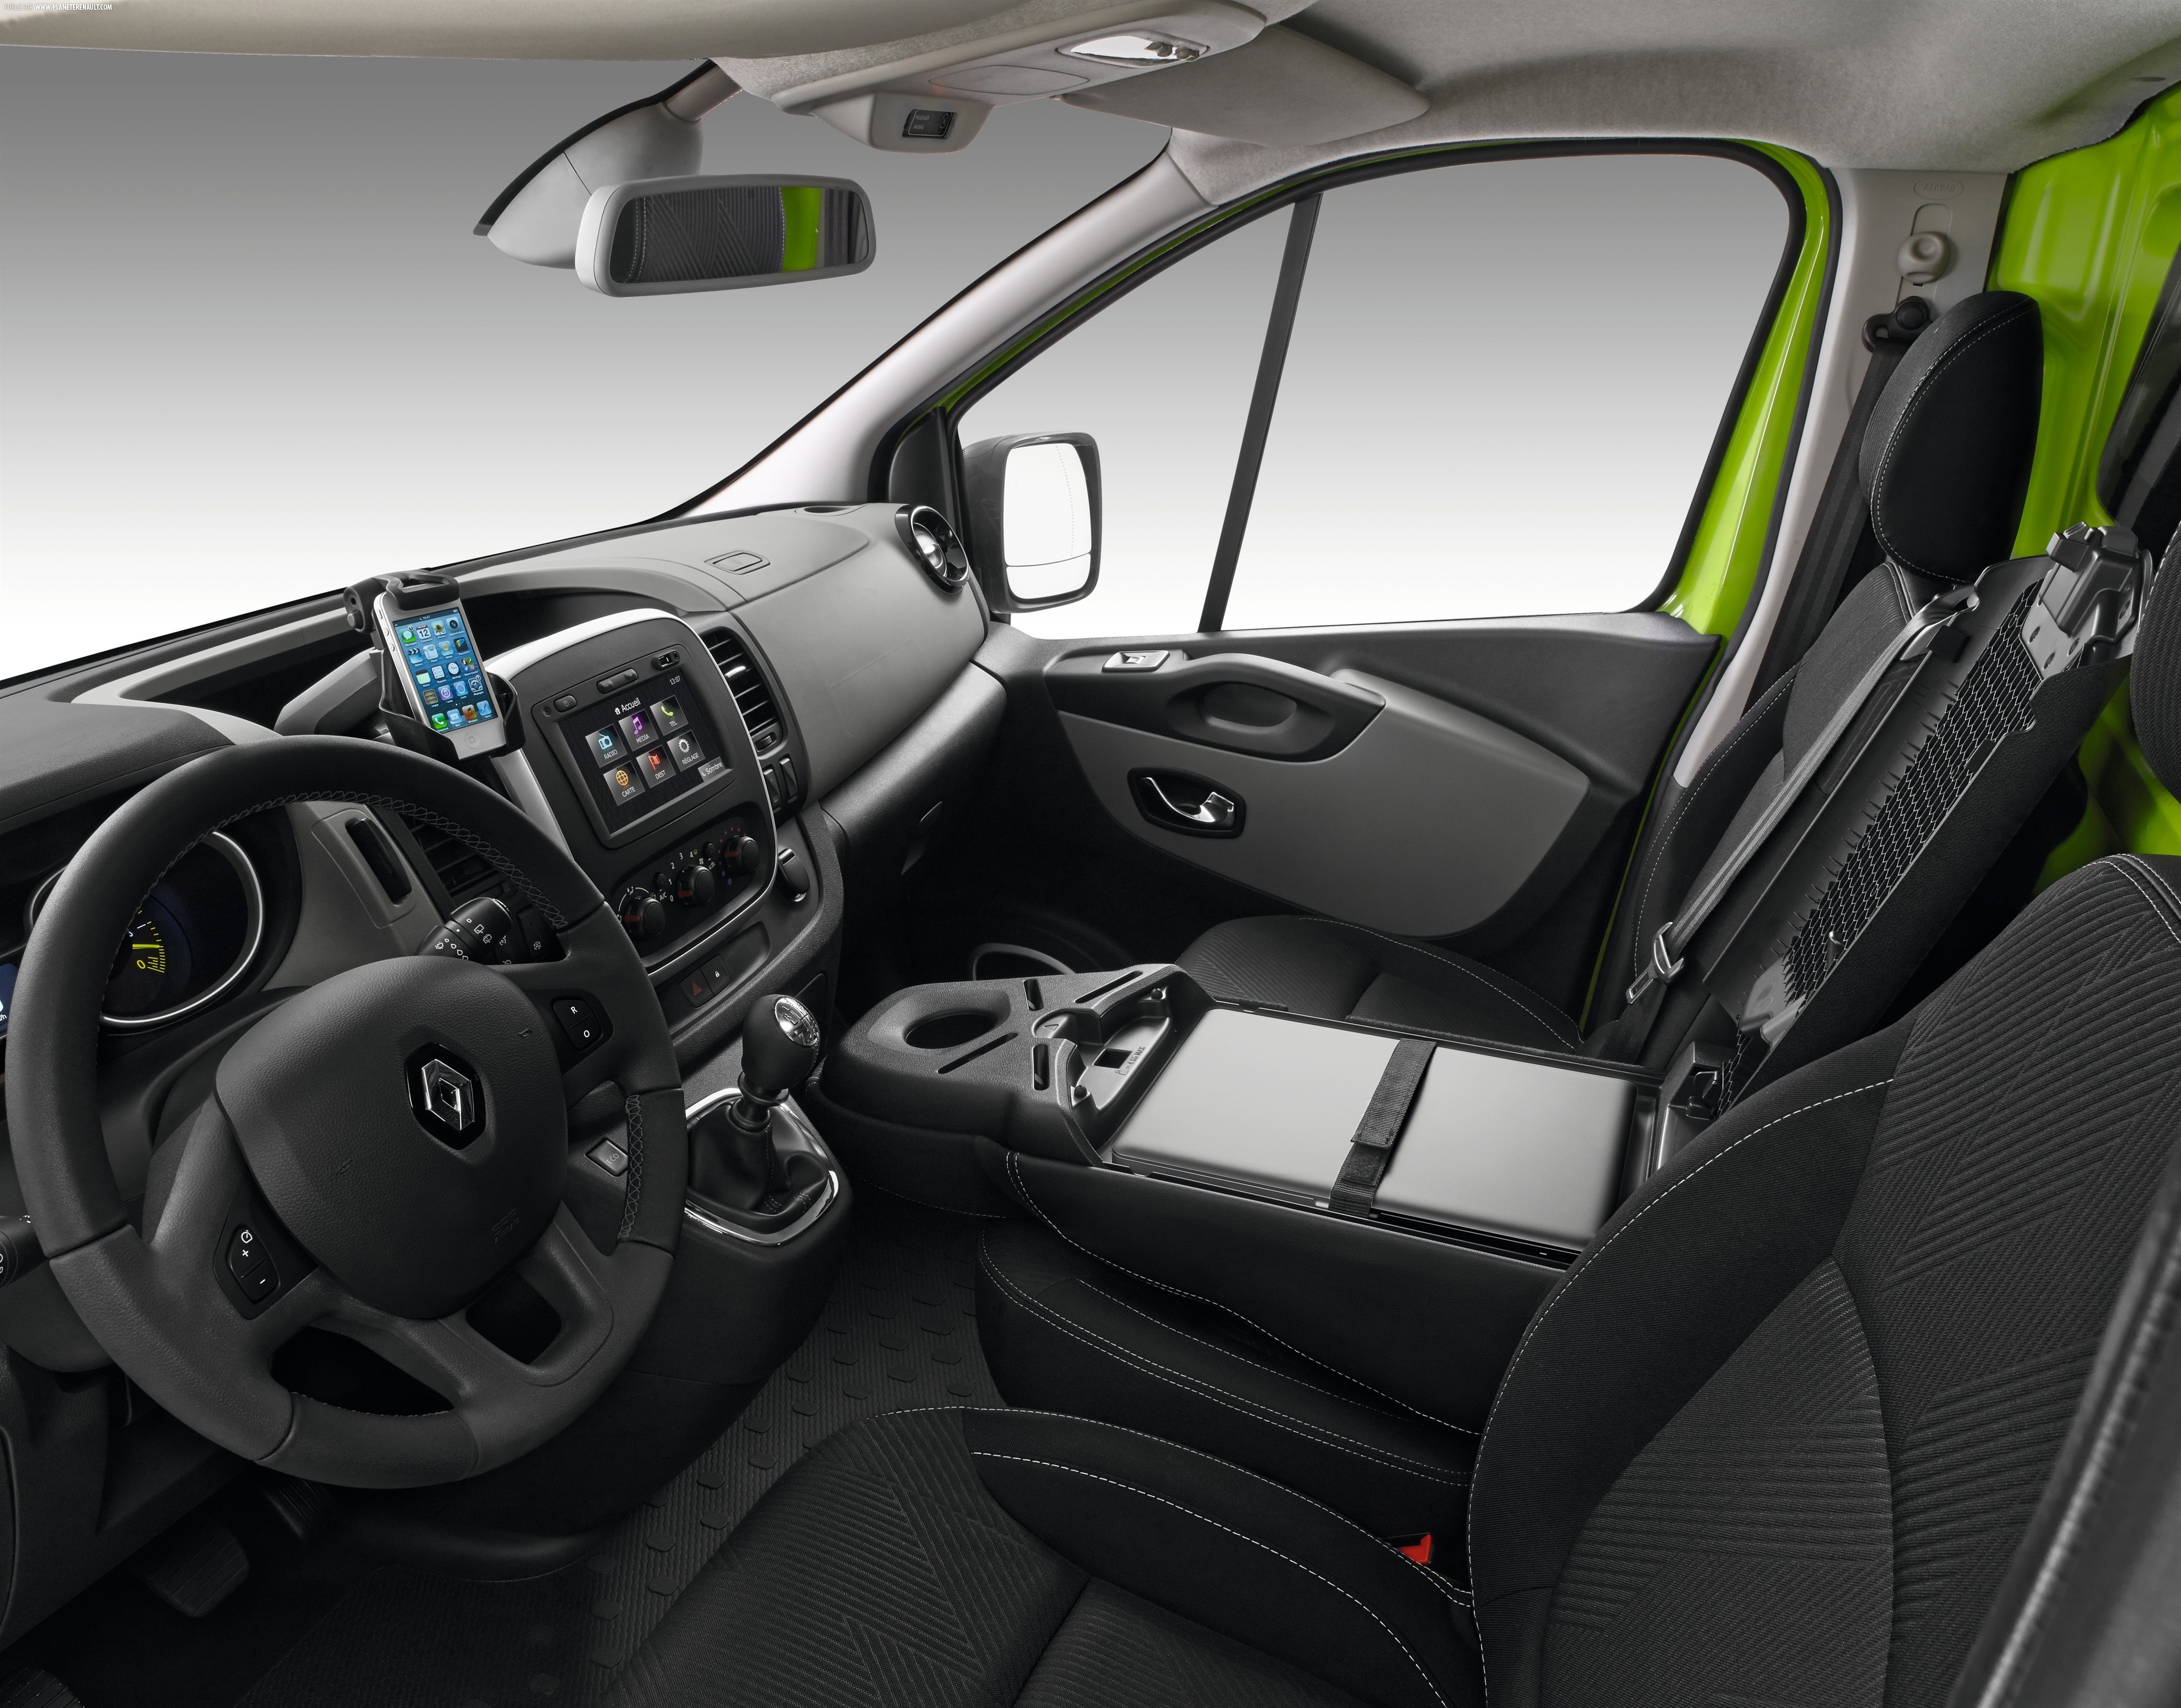 Opel Vivaro Sport Combi interior restyling